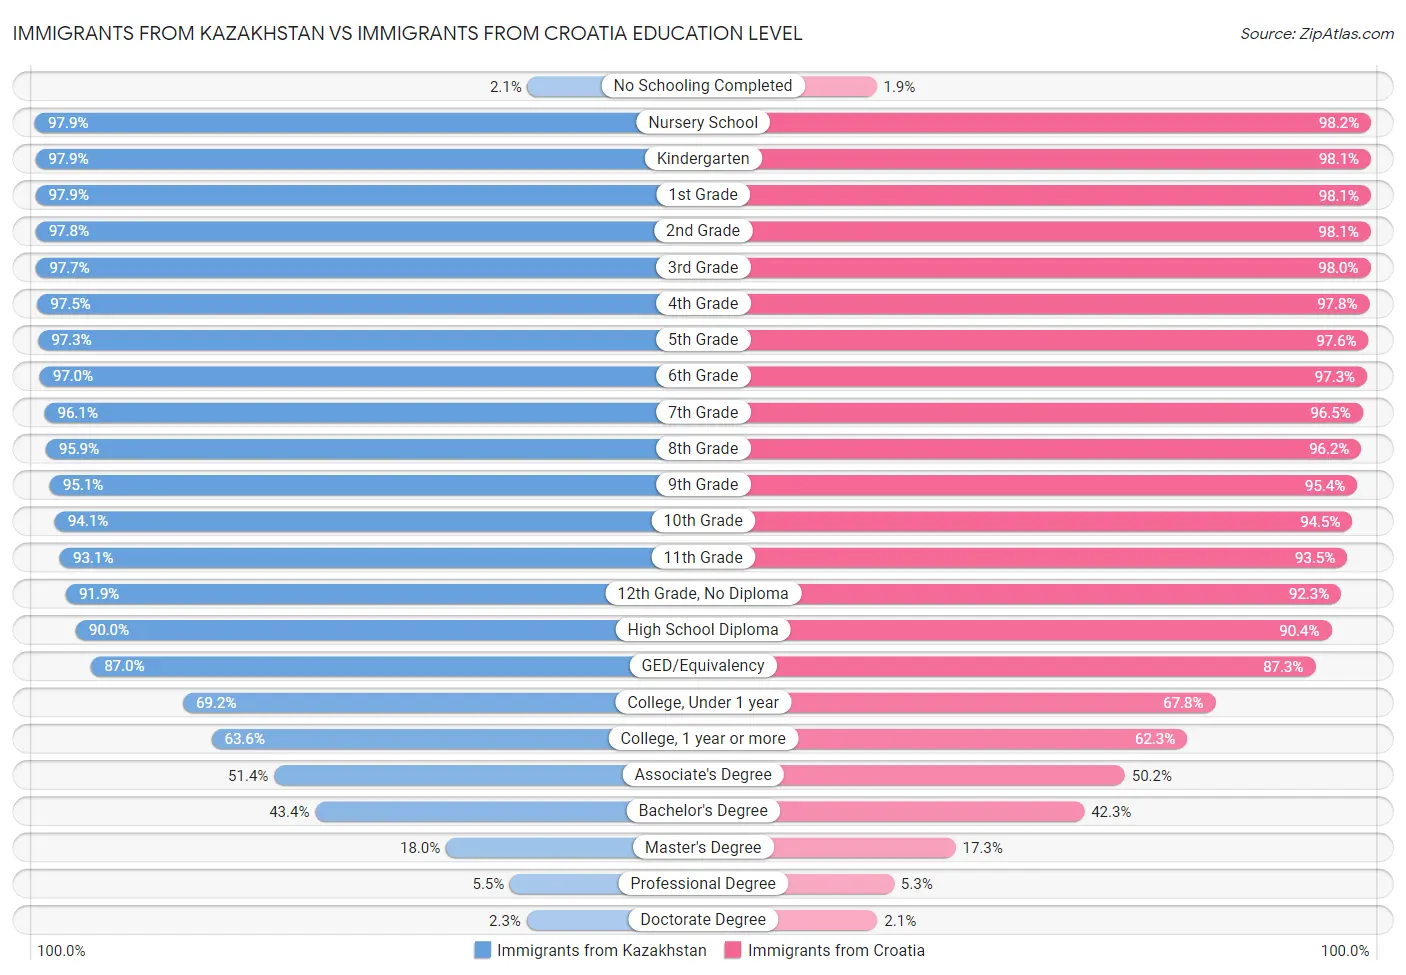 Immigrants from Kazakhstan vs Immigrants from Croatia Education Level